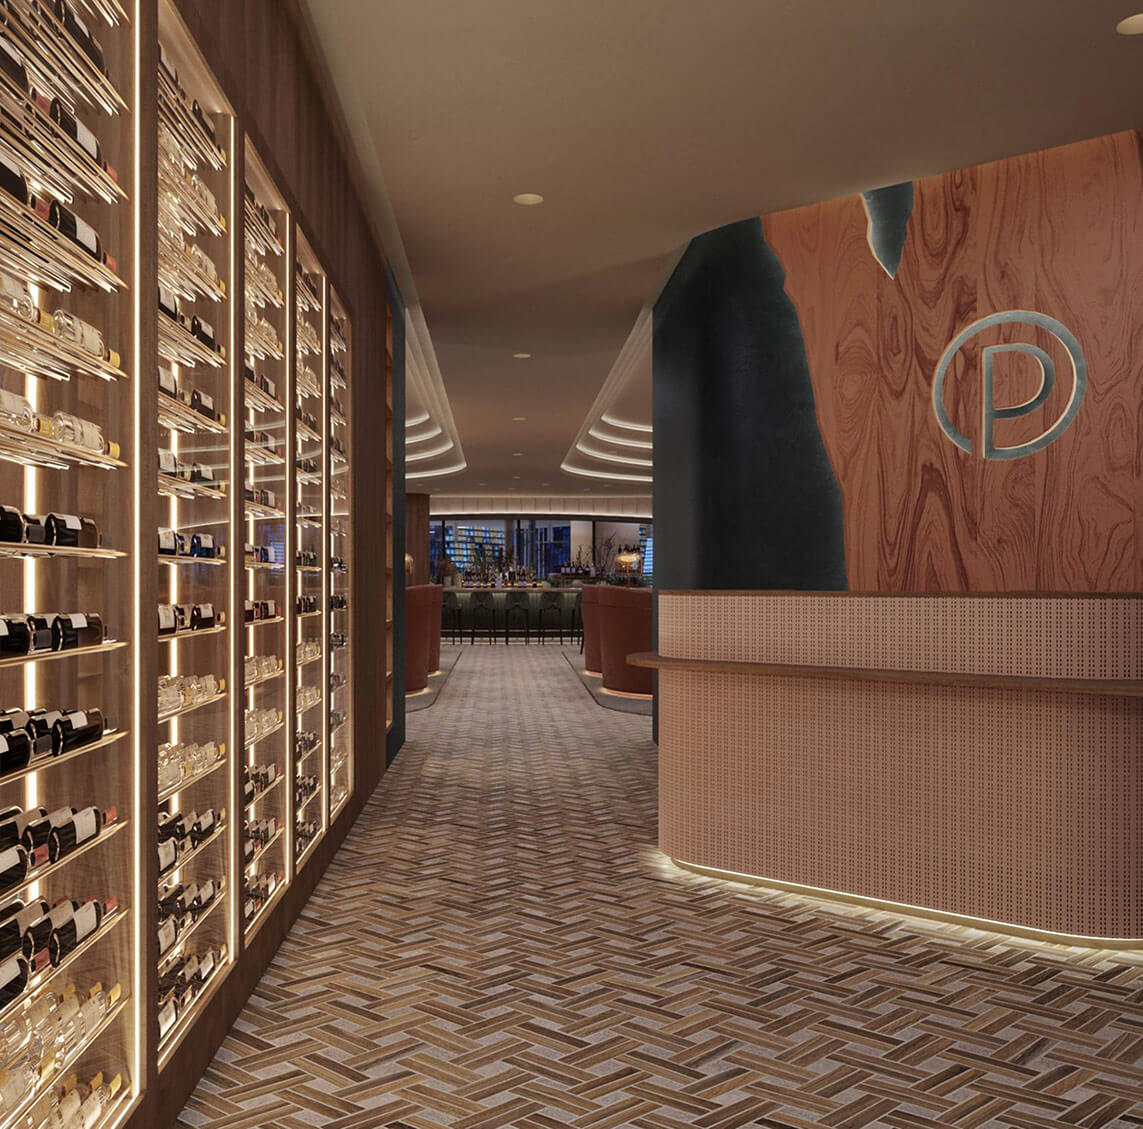 entryway to ocean prime las vegas restaurant with wine bottles